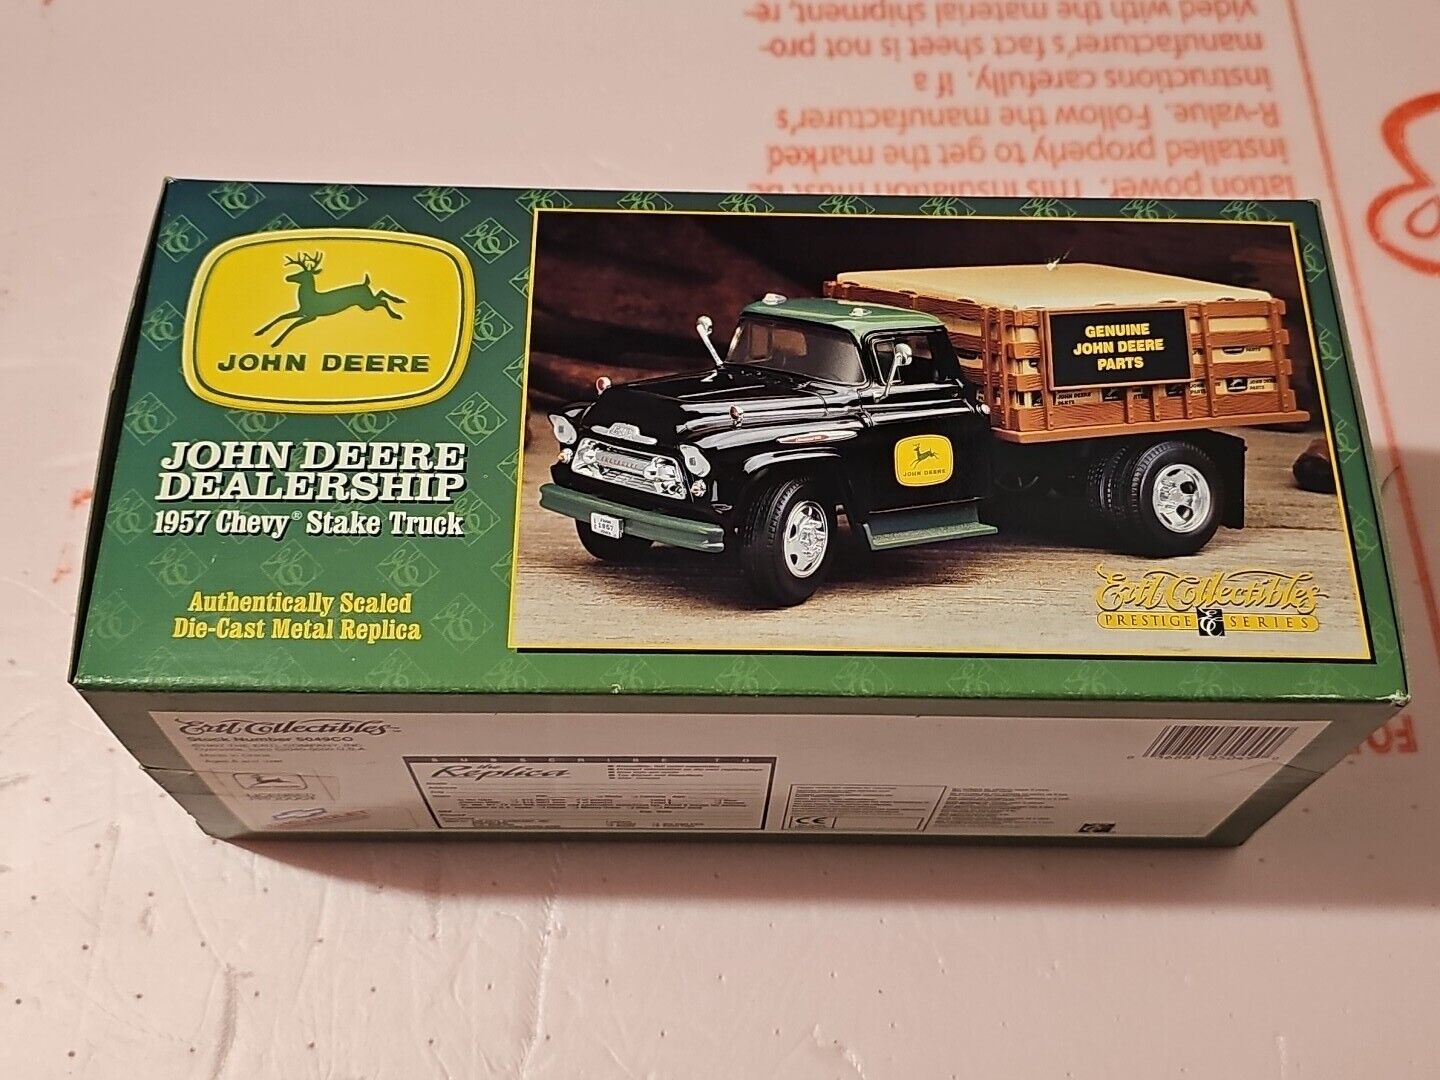 Vintage John Deere 1957 toy Chevy stake truck.